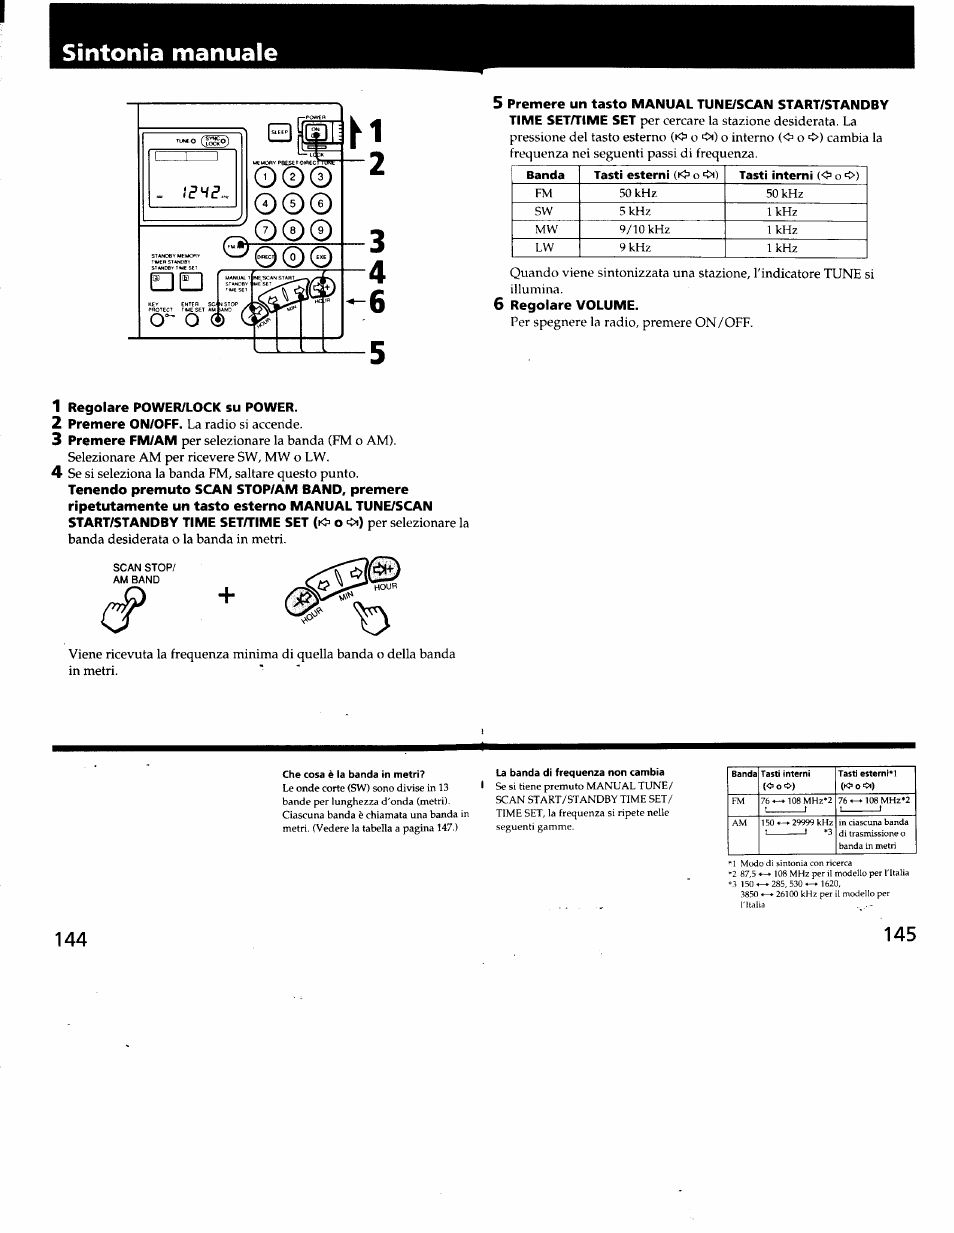 Sintonia manuale | Sony ICF-SW7600G User Manual | Page 73 / 80 | Original  mode